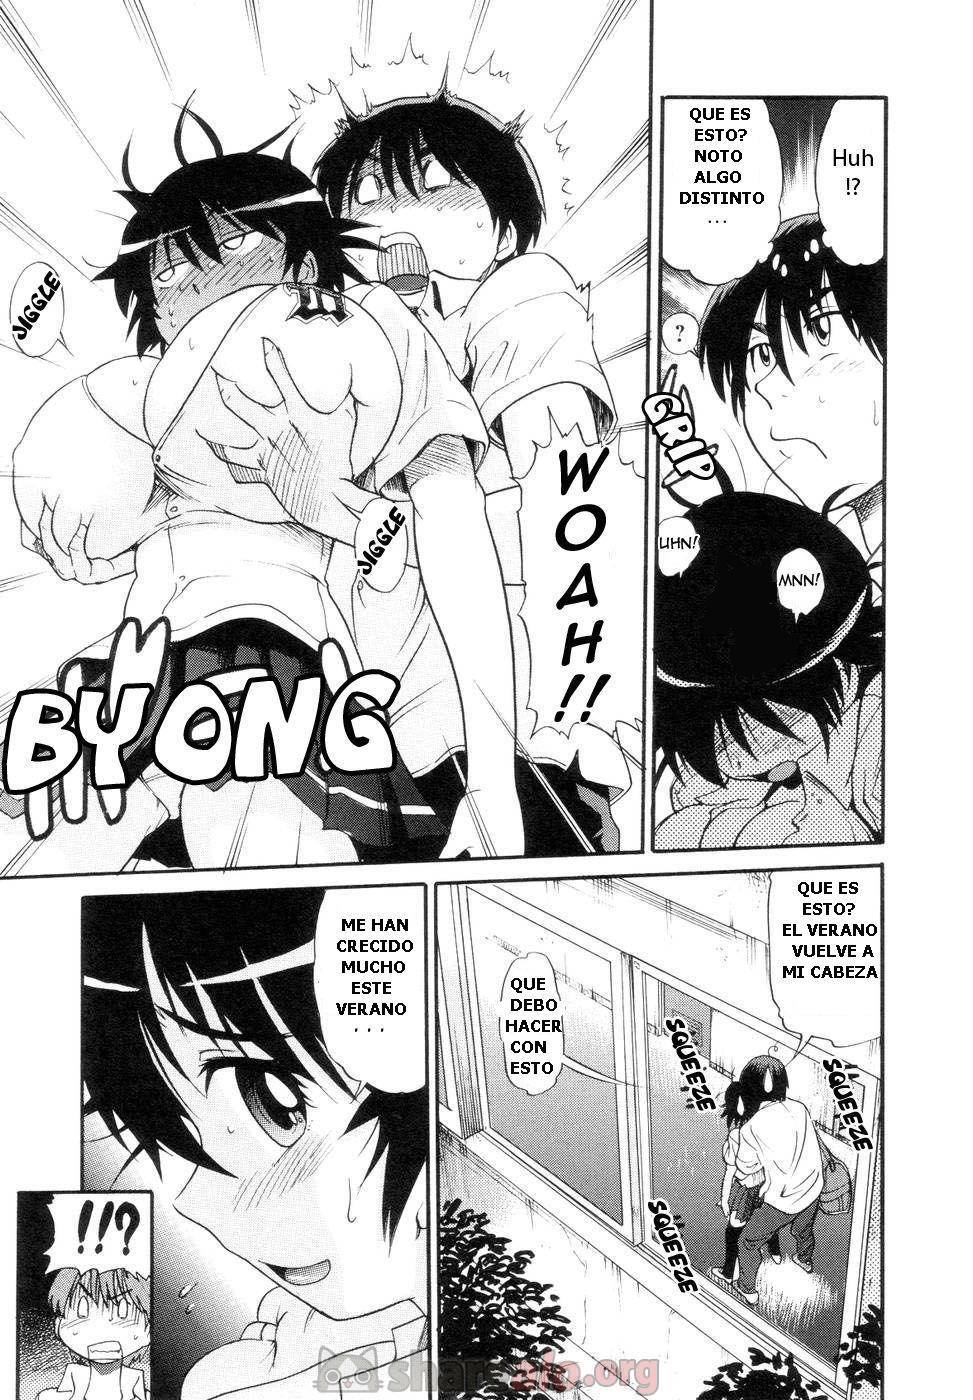 ¿Quieres Hacerlo? - 9 - Comics Porno - Hentai Manga - Cartoon XXX